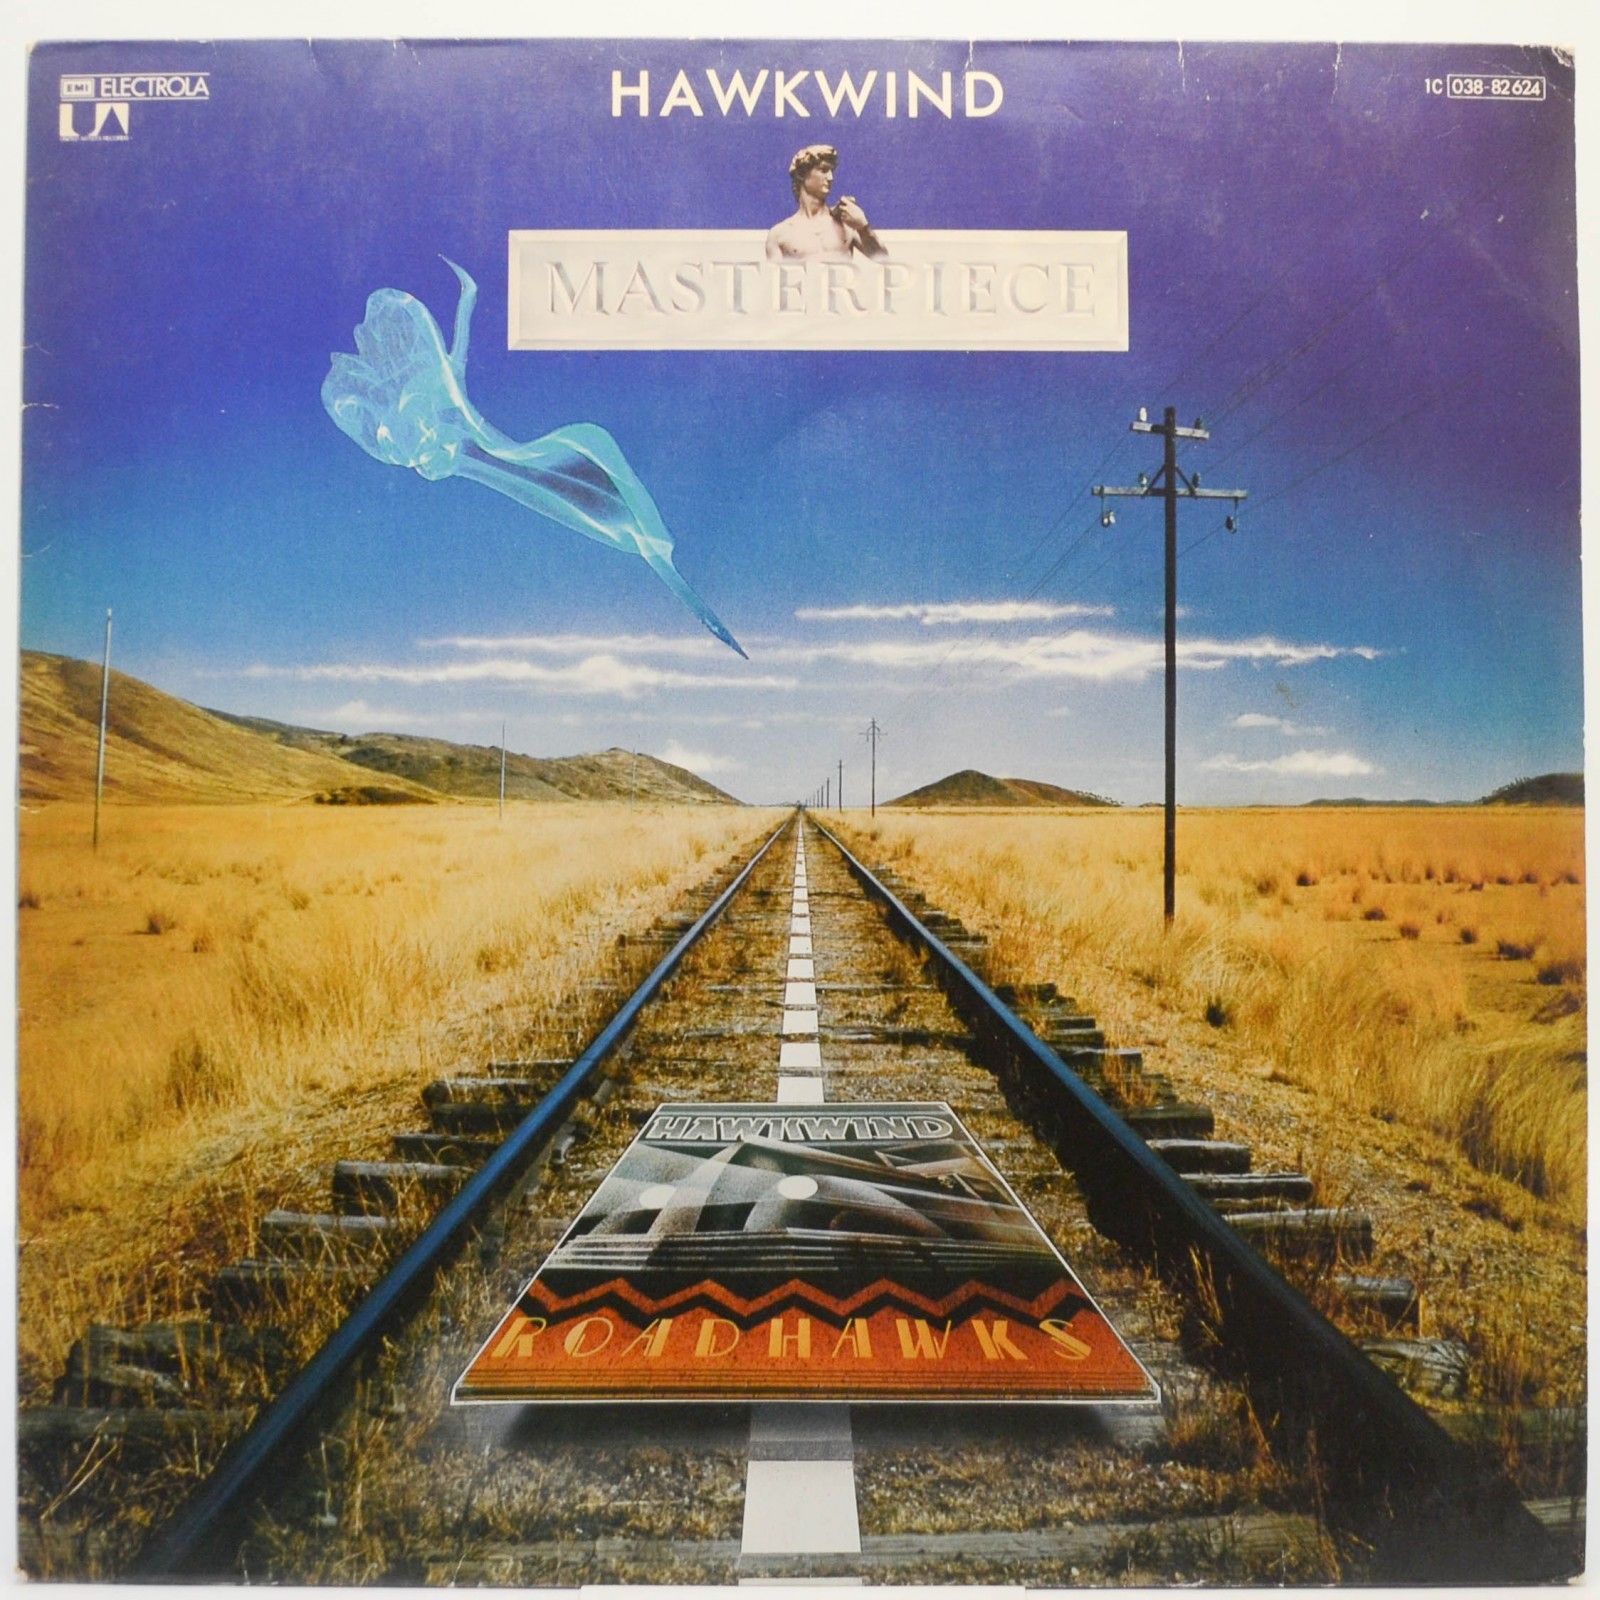 Hawkwind — Roadhawks, 1975